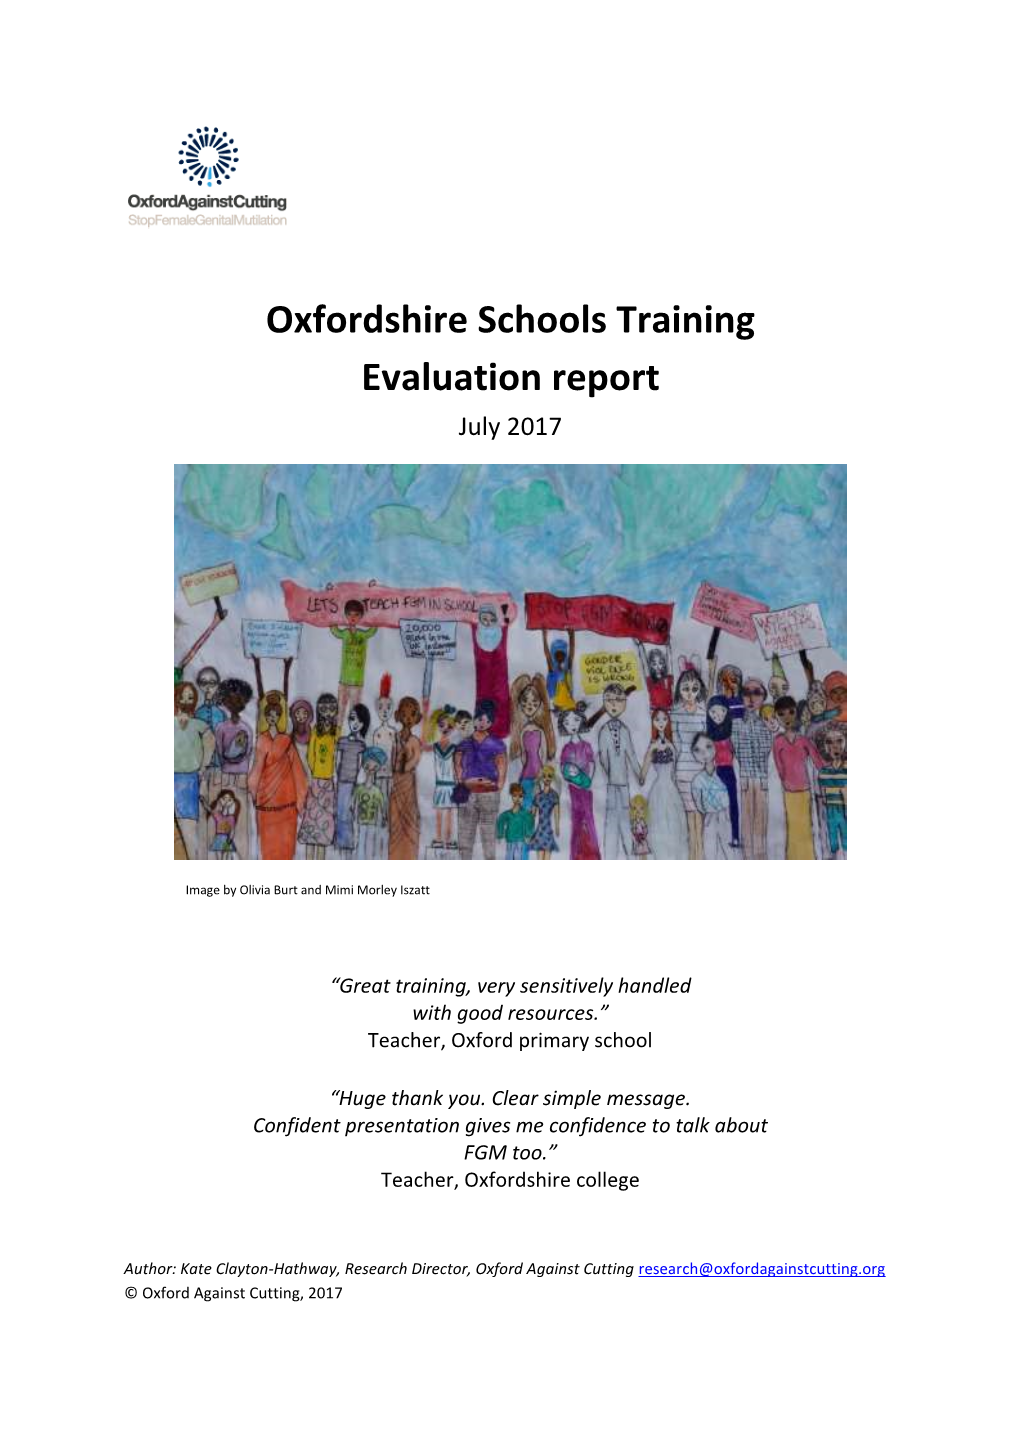 Oxfordshire Schools Training Evaluation Report July 2017